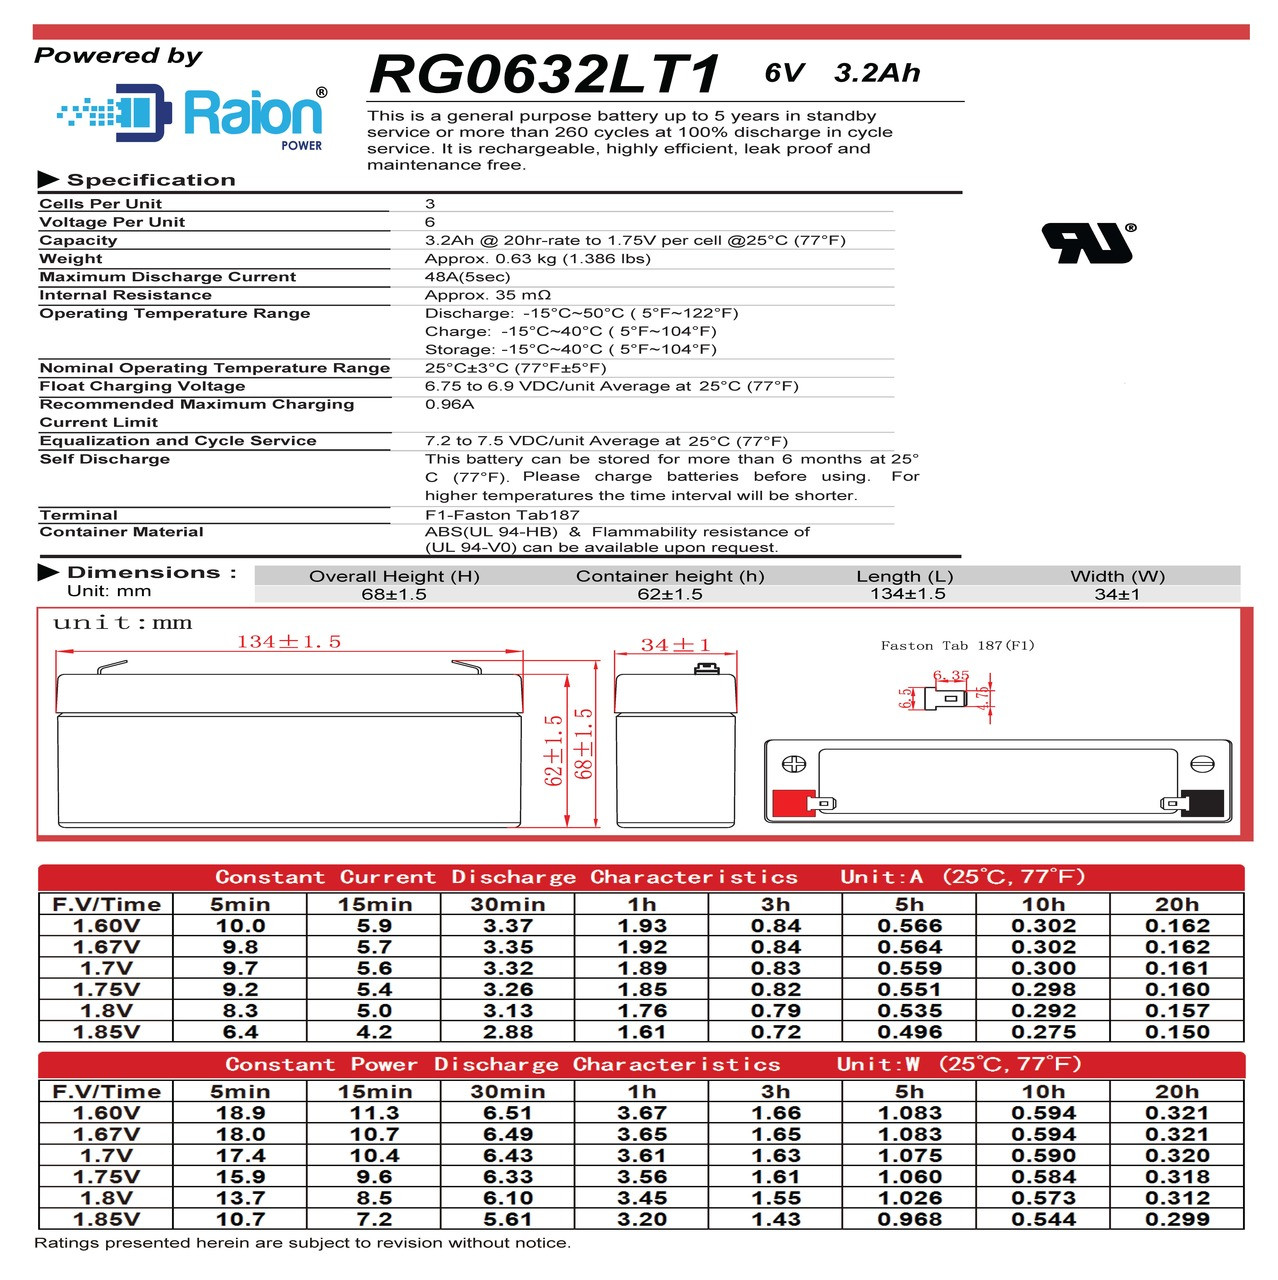 Raion Power RG0632LT1 6V 3.2Ah Battery Data Sheet for Bosfa GB6-3.2